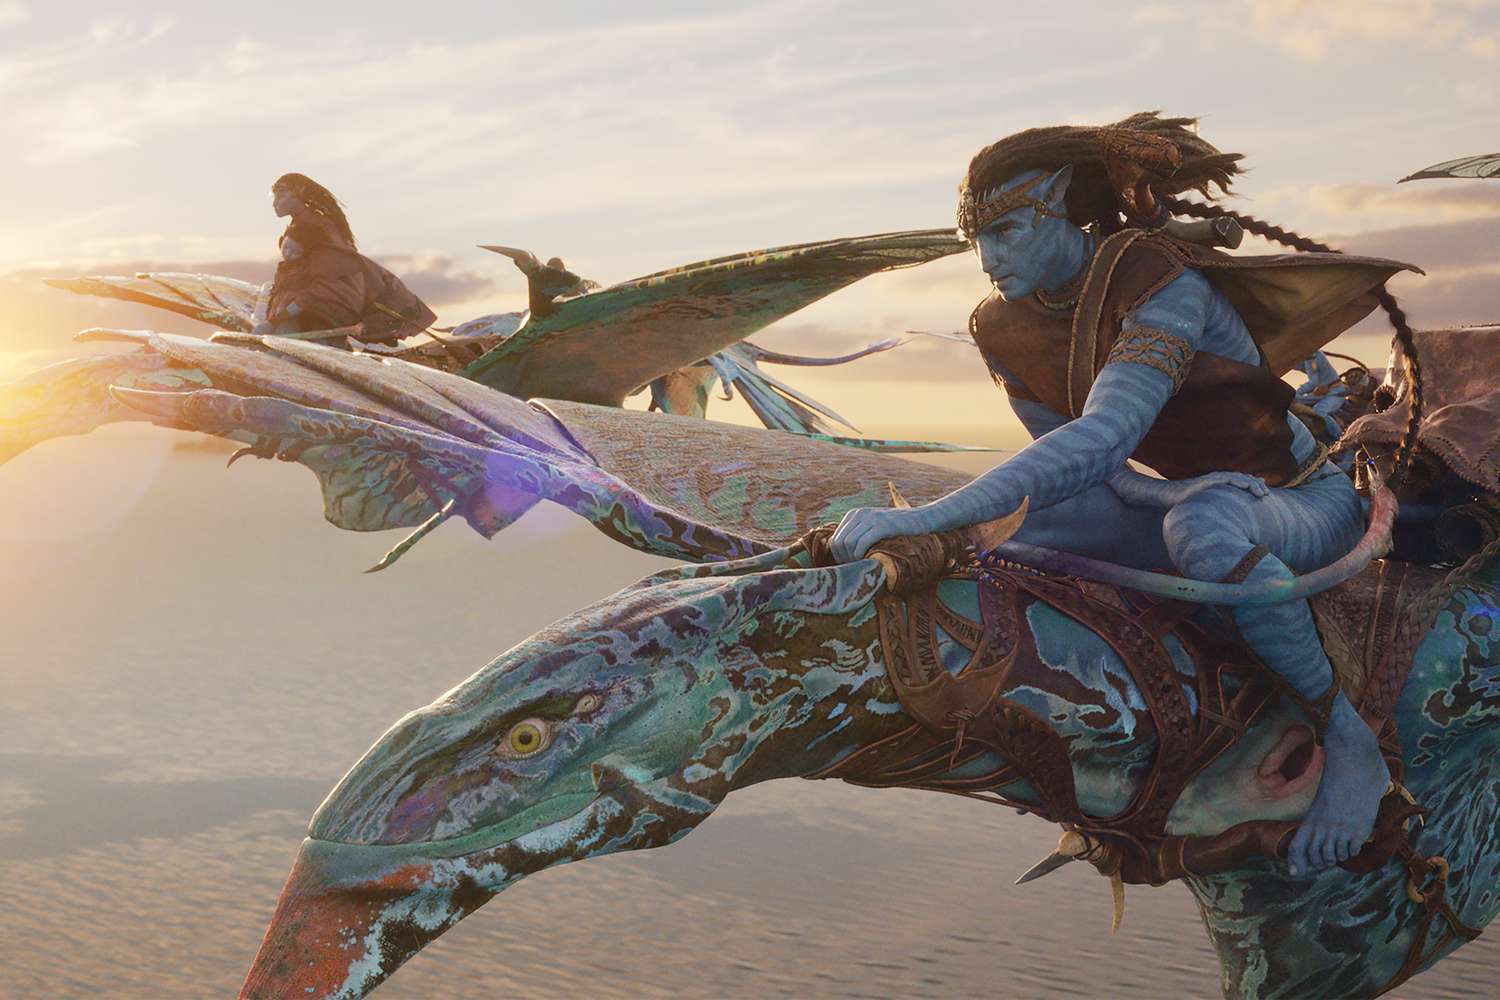 Neytiri (Zoe Saldana) and Jake Sully (Sam Worthington) in 'Avatar: The Way of Water'